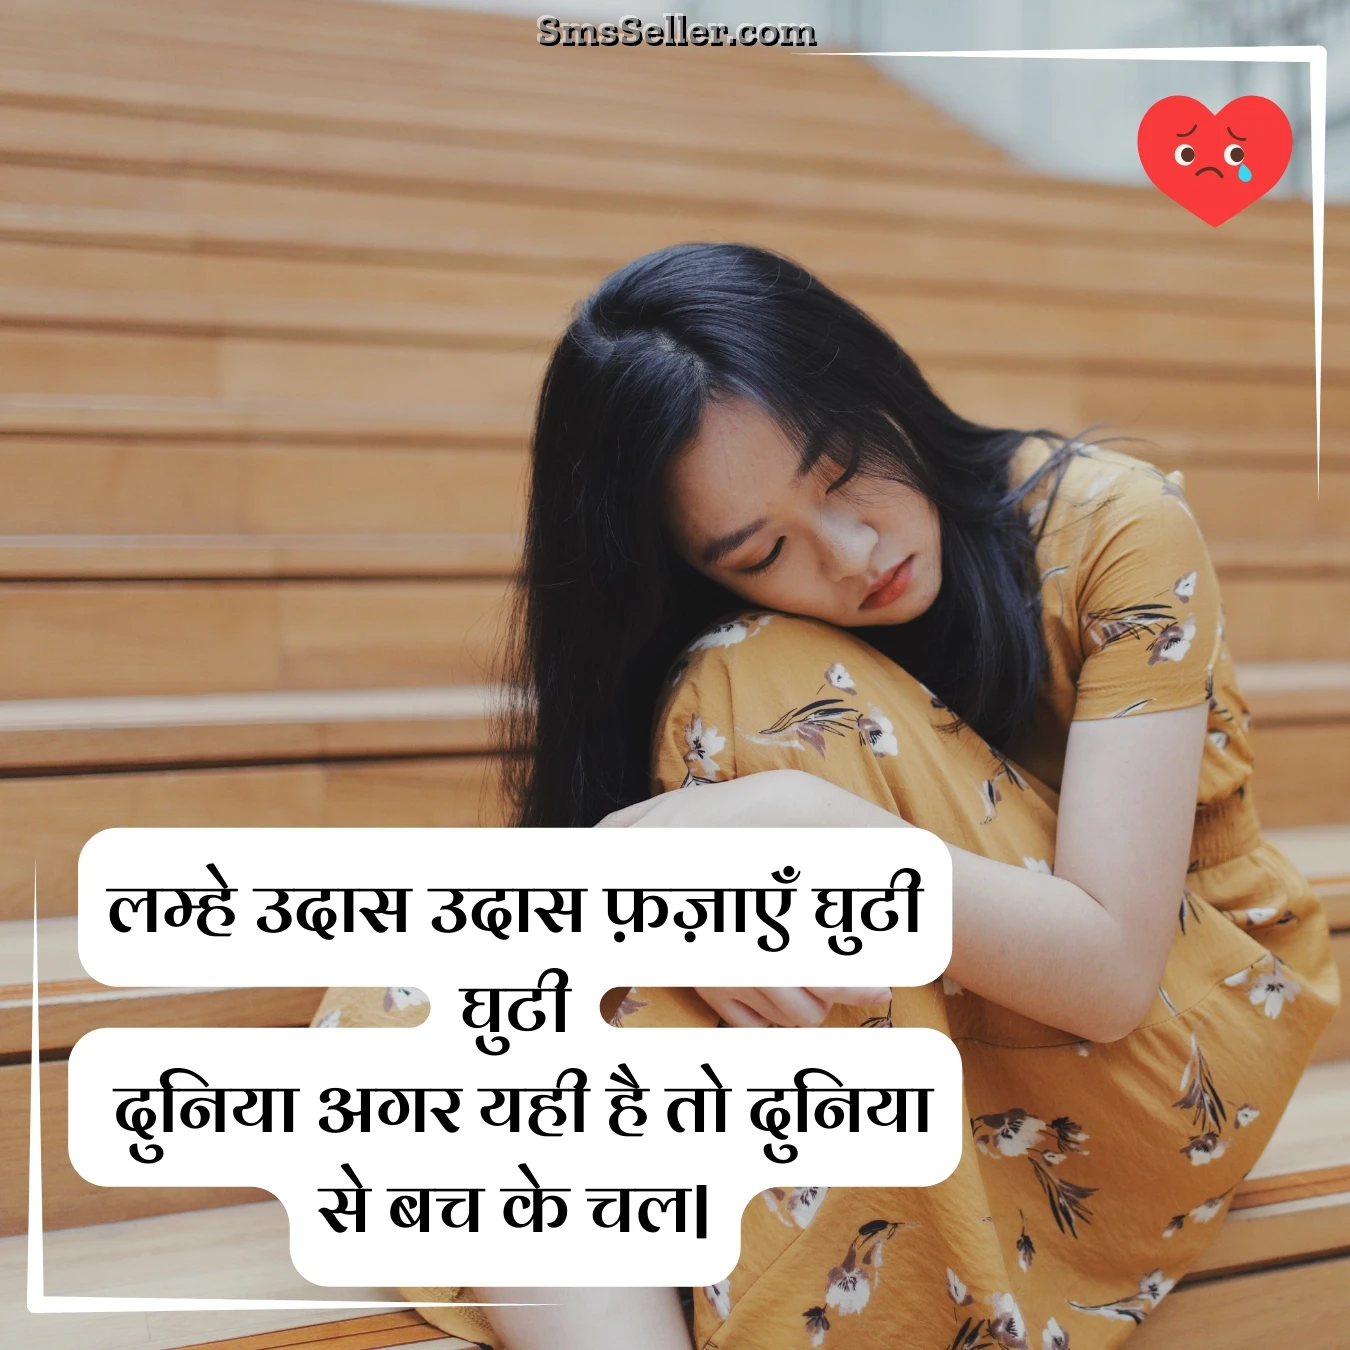 alone sad quotes in hindi lamhe udaas fazaen ghuti